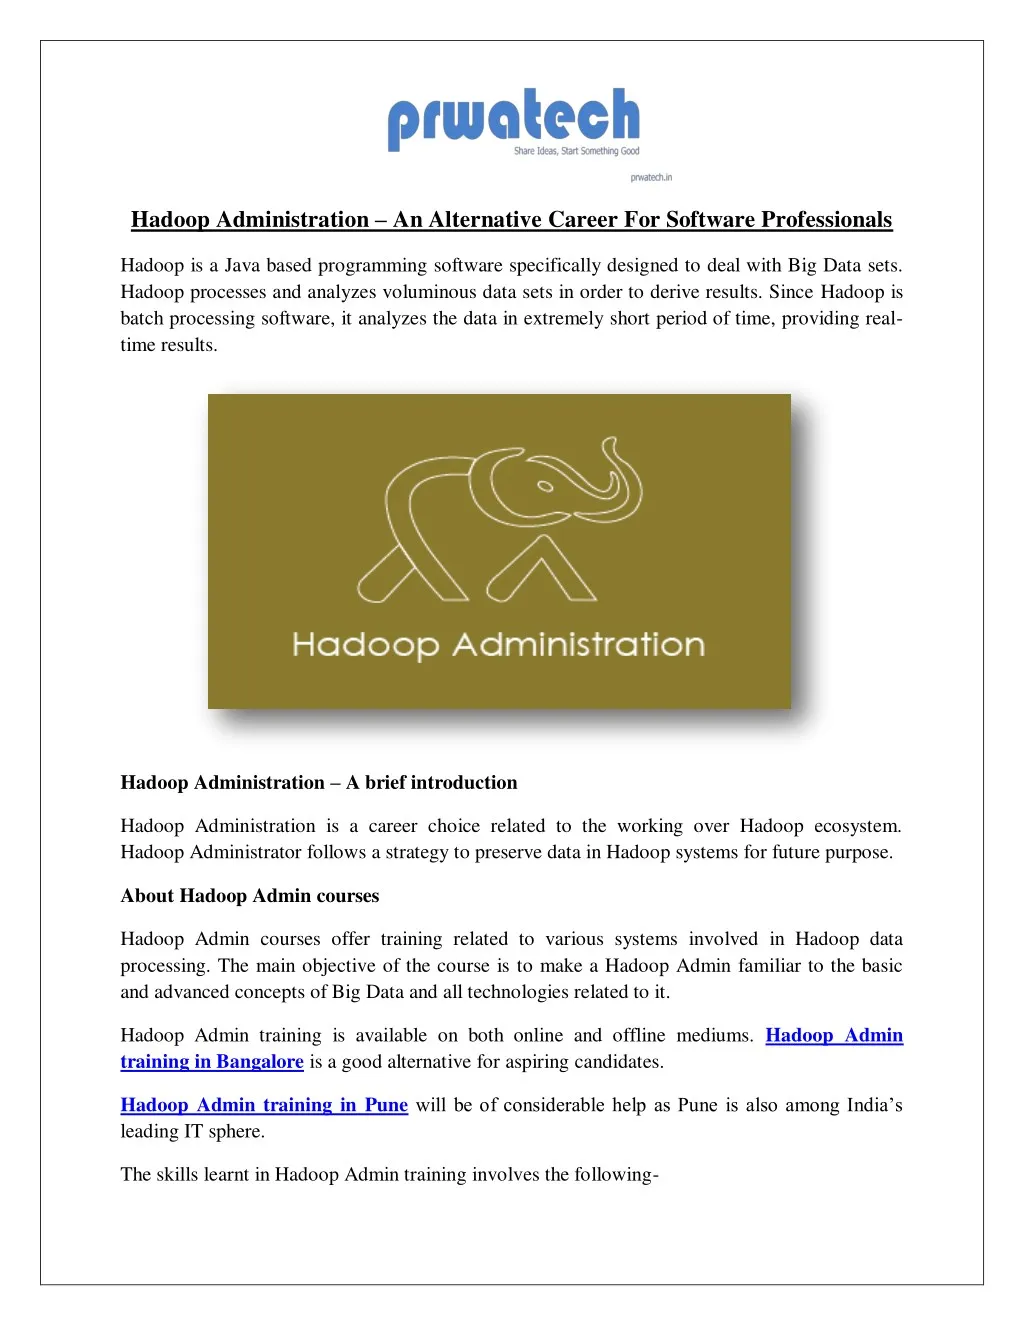 hadoop administration an alternative career